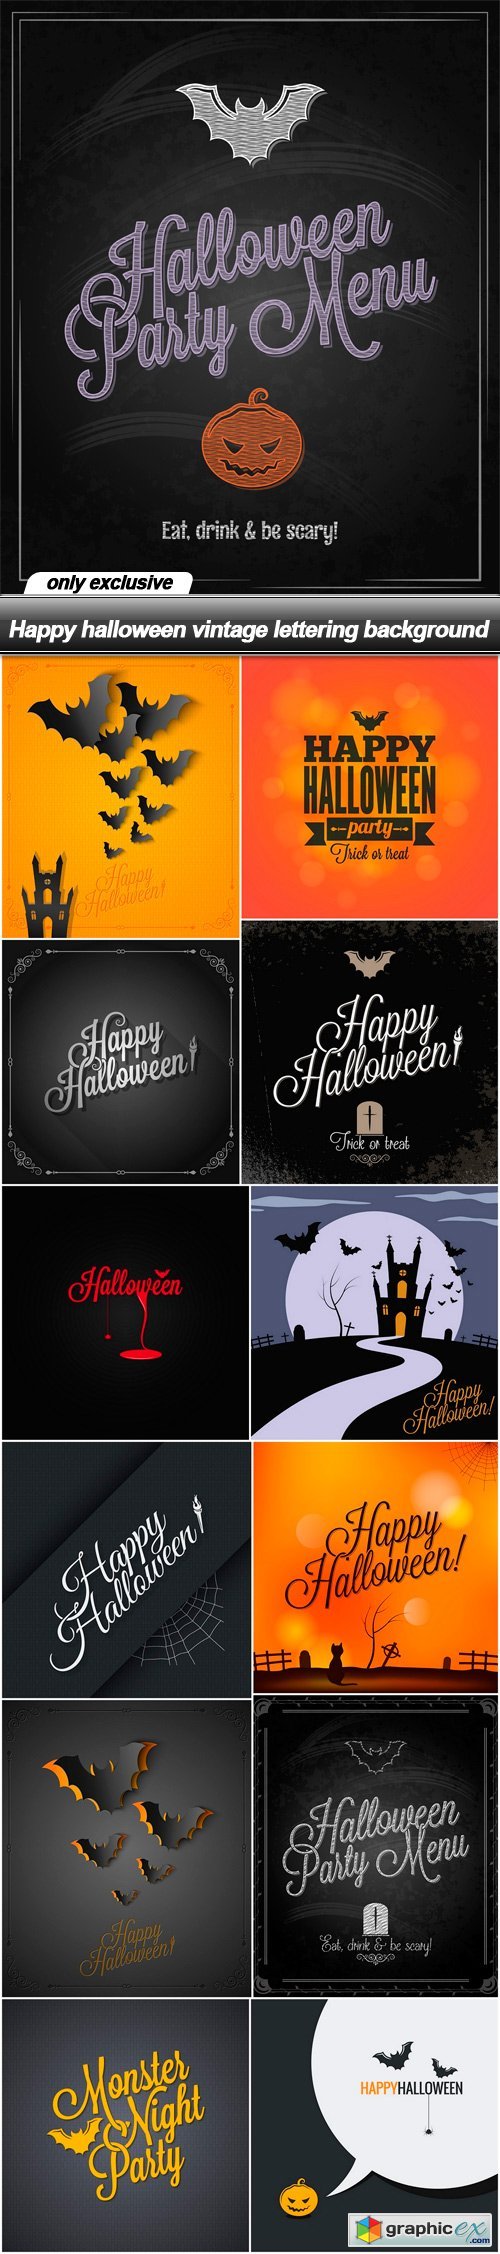 Happy halloween vintage lettering background - 13 EPS